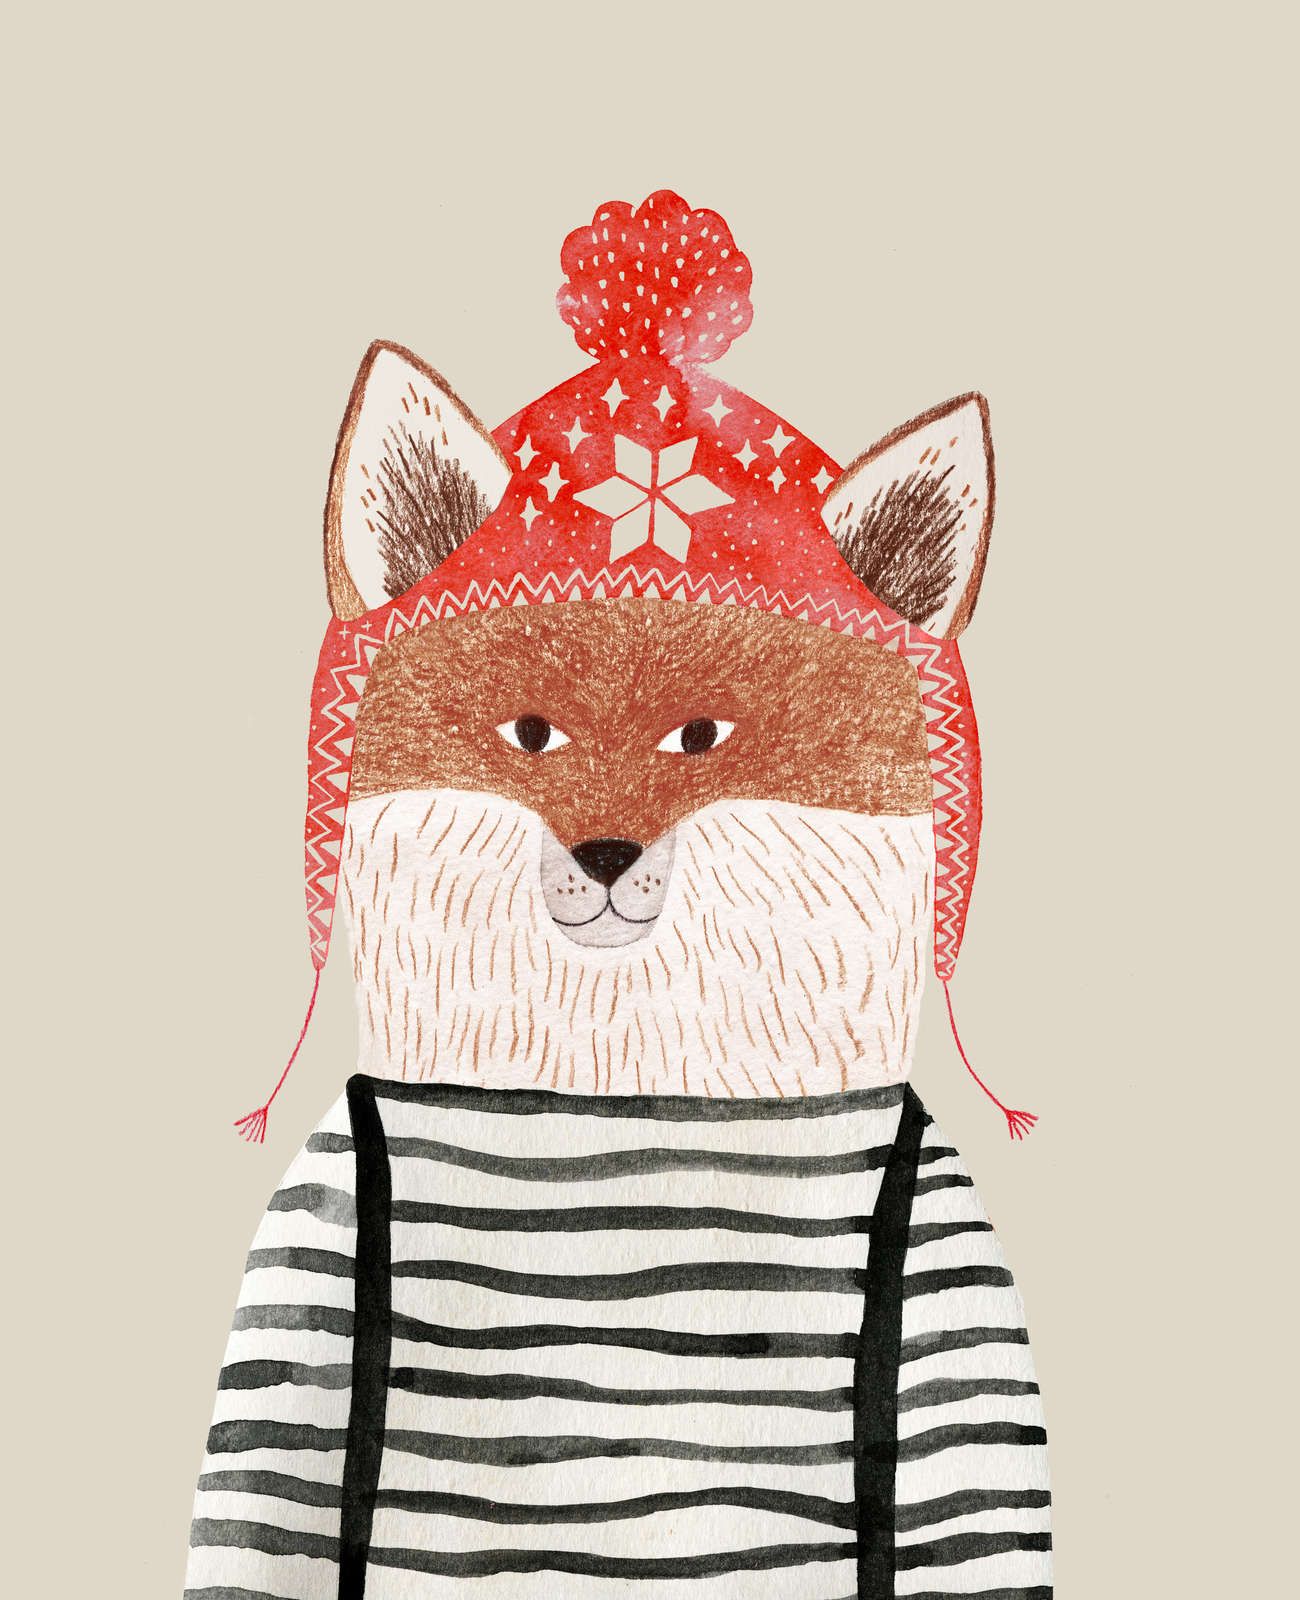             Fox with pom-pom hat mural - Smooth & matt non-woven
        